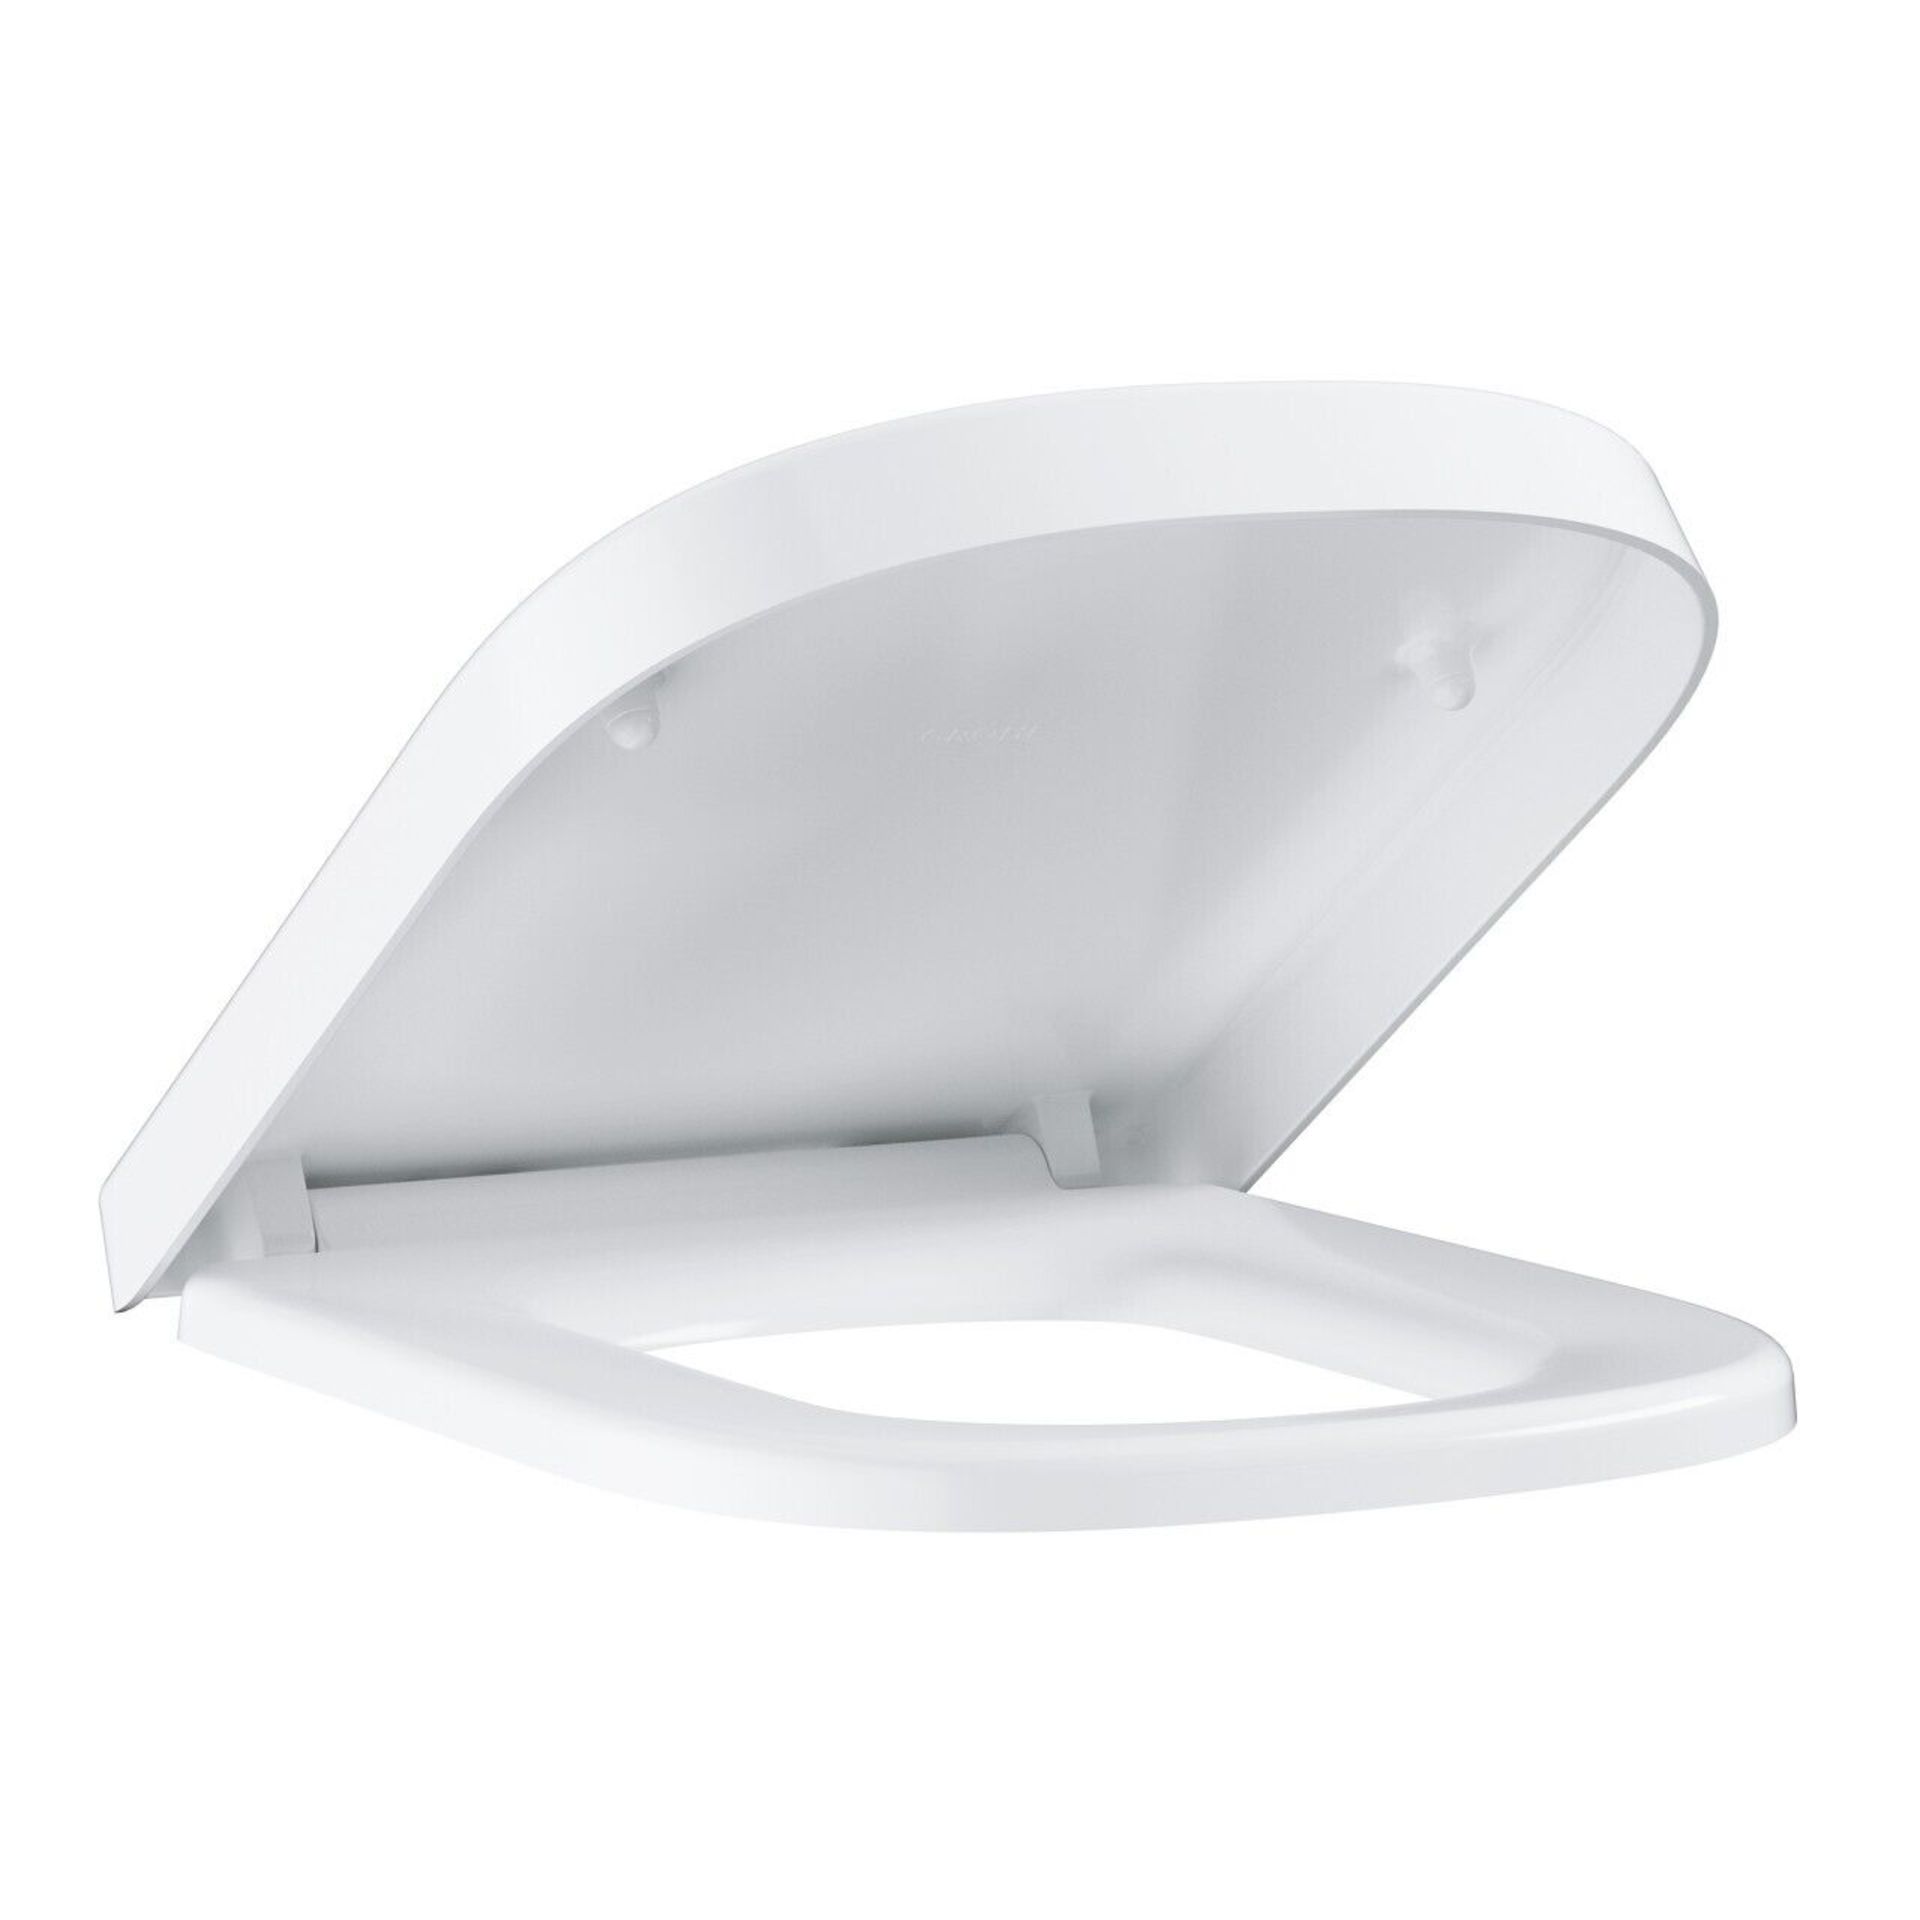 Grohe Euro Ceramic Toilet Seat, Soft Close, White (39330001)